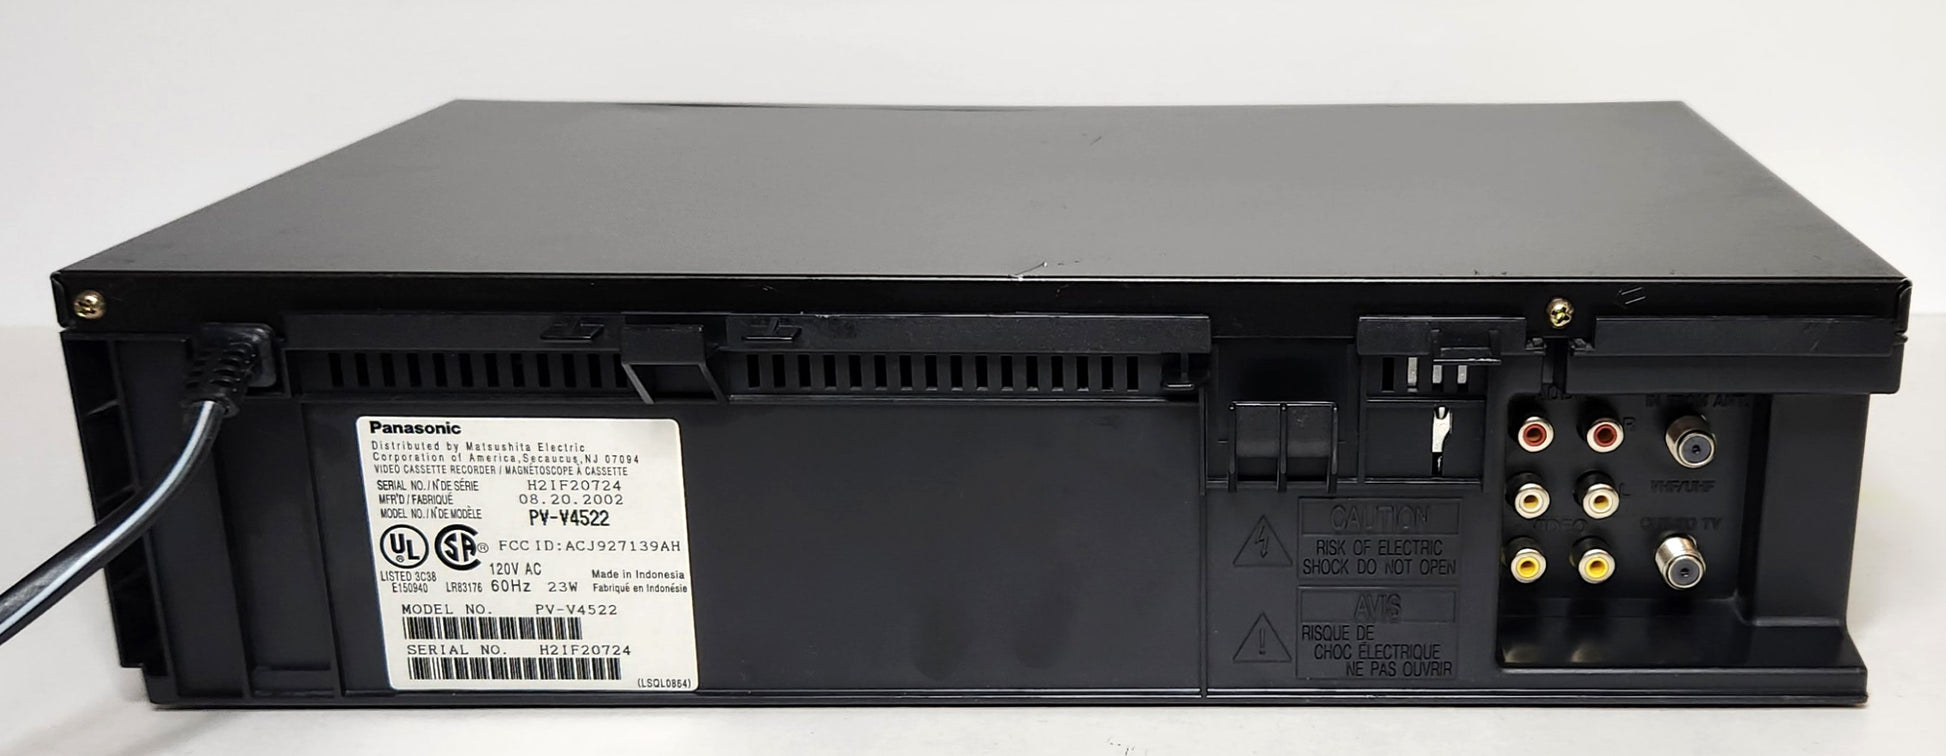 Panasonic PV-V4522 Omnivision VCR, 4-Head Hi-Fi Stereo - Back